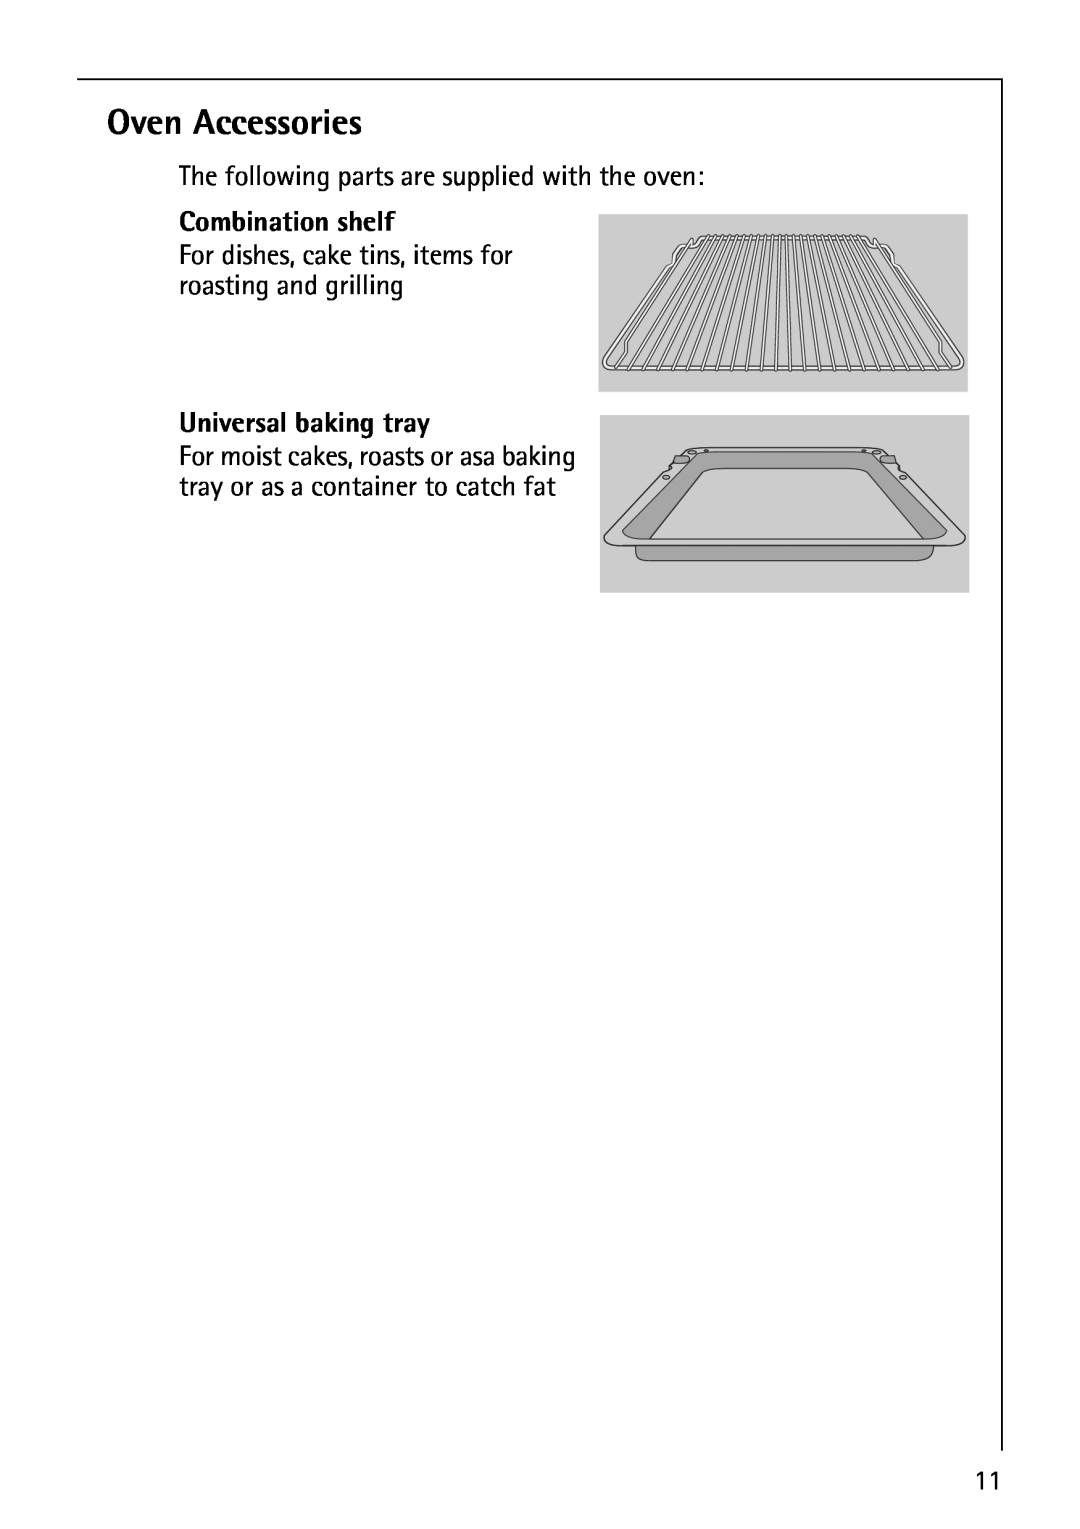 AEG E3100-1 manual Oven Accessories, Combination shelf, Universal baking tray 